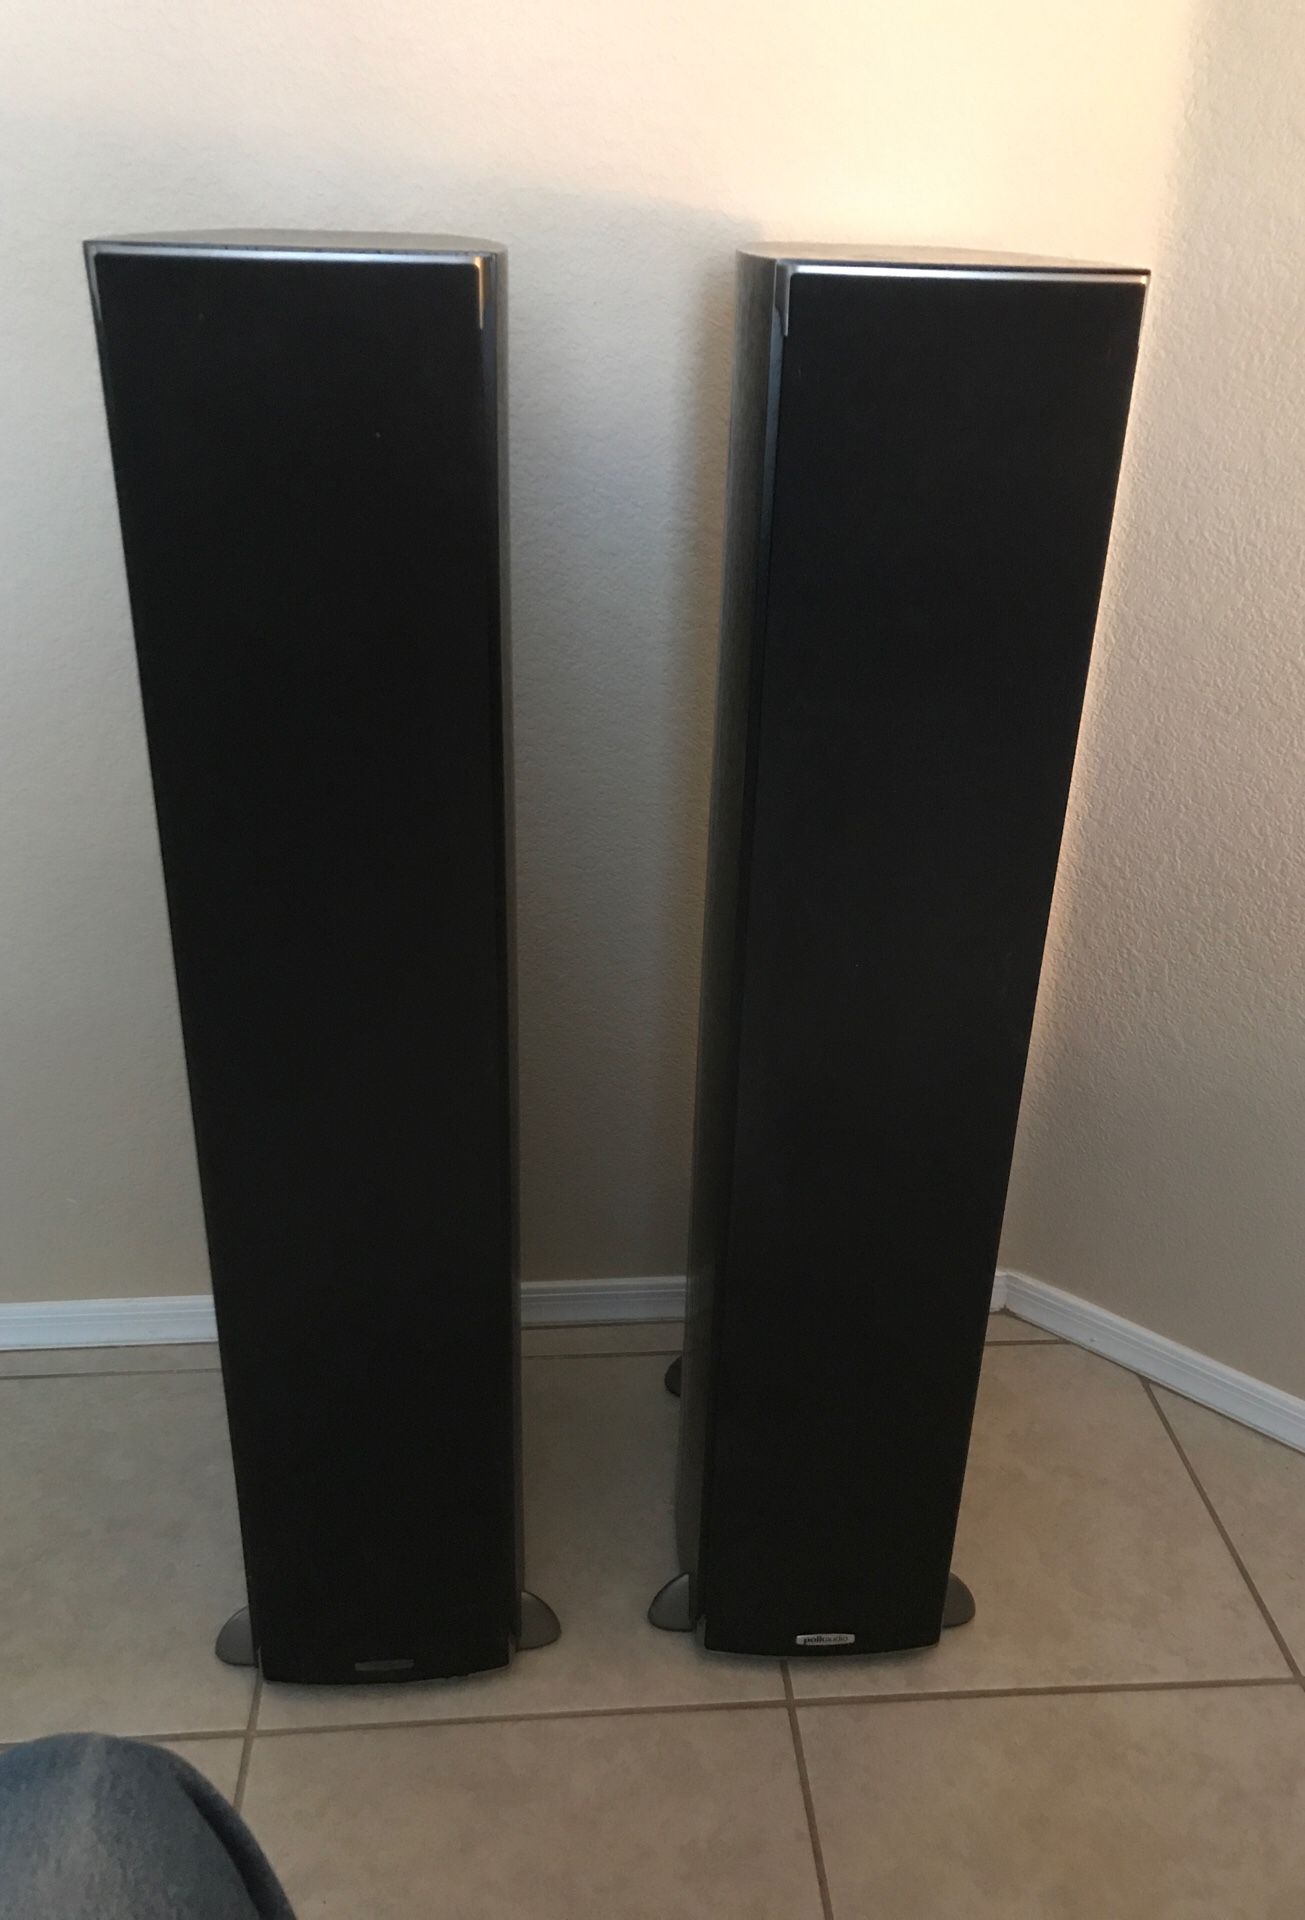 2 RTi A5 Polk speakers